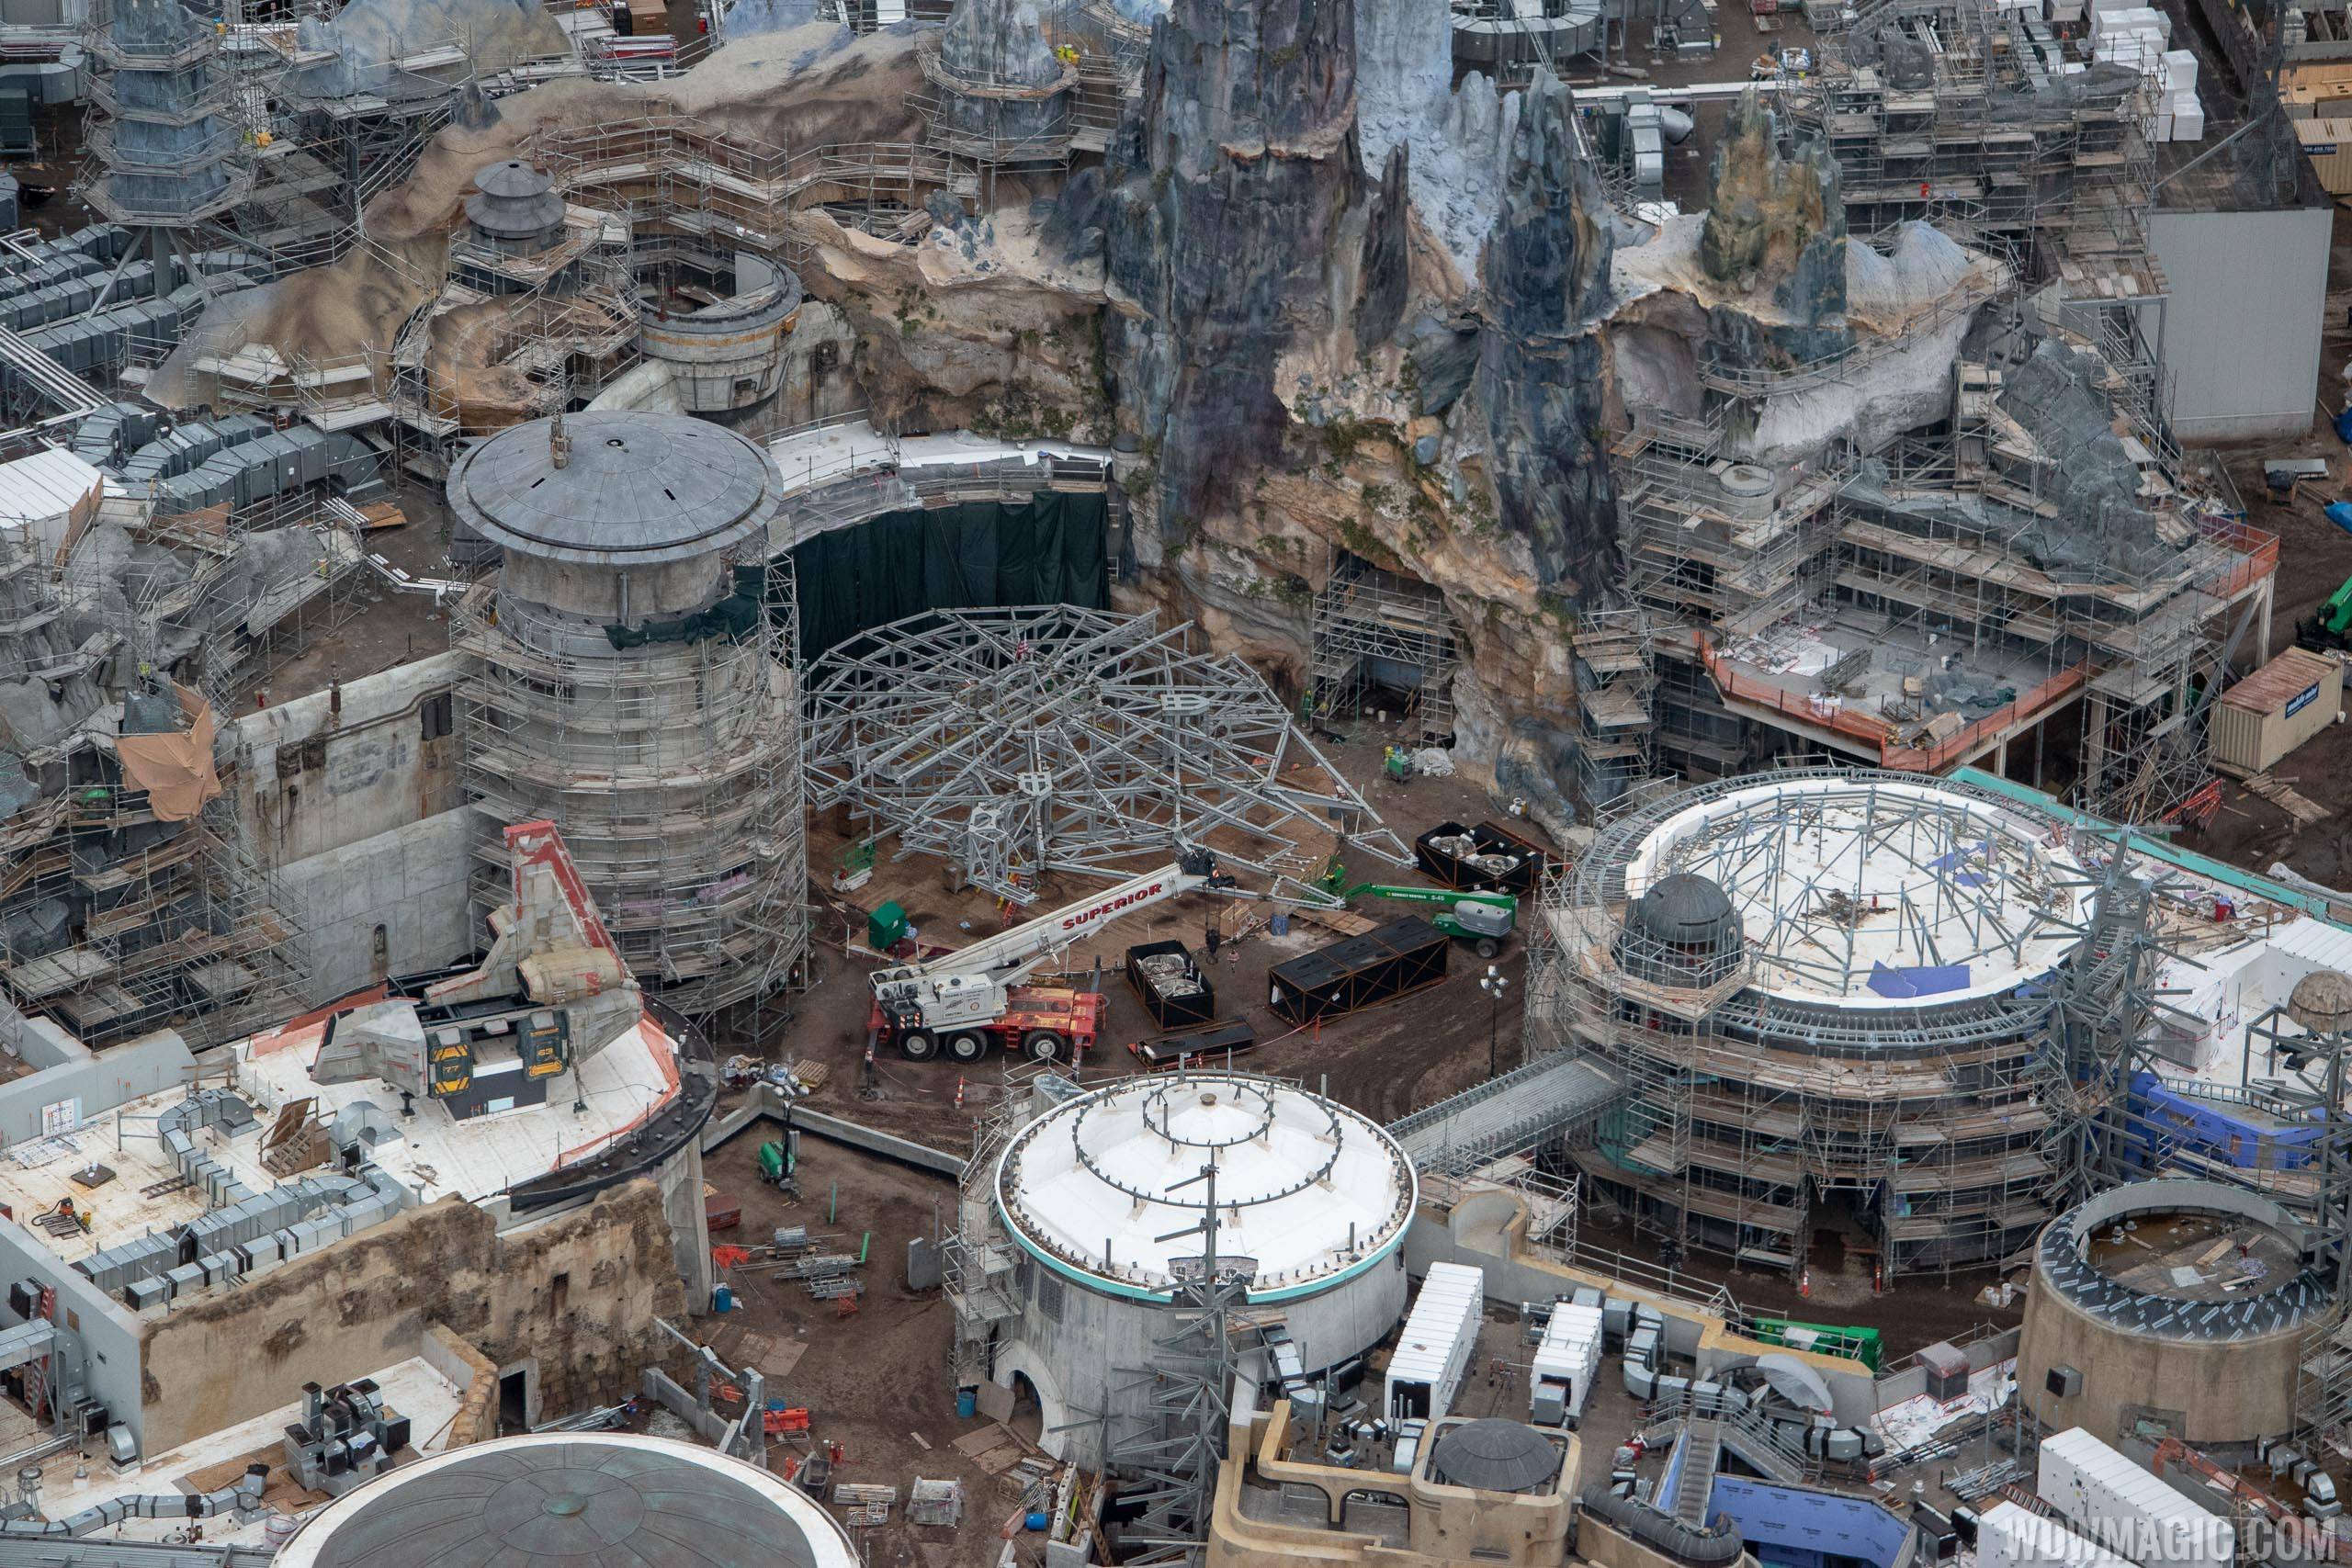 PHOTOS - Aerial views of Star Wars Galaxy's Edge at Disney's Hollywood Studios including the Millennium Falcon